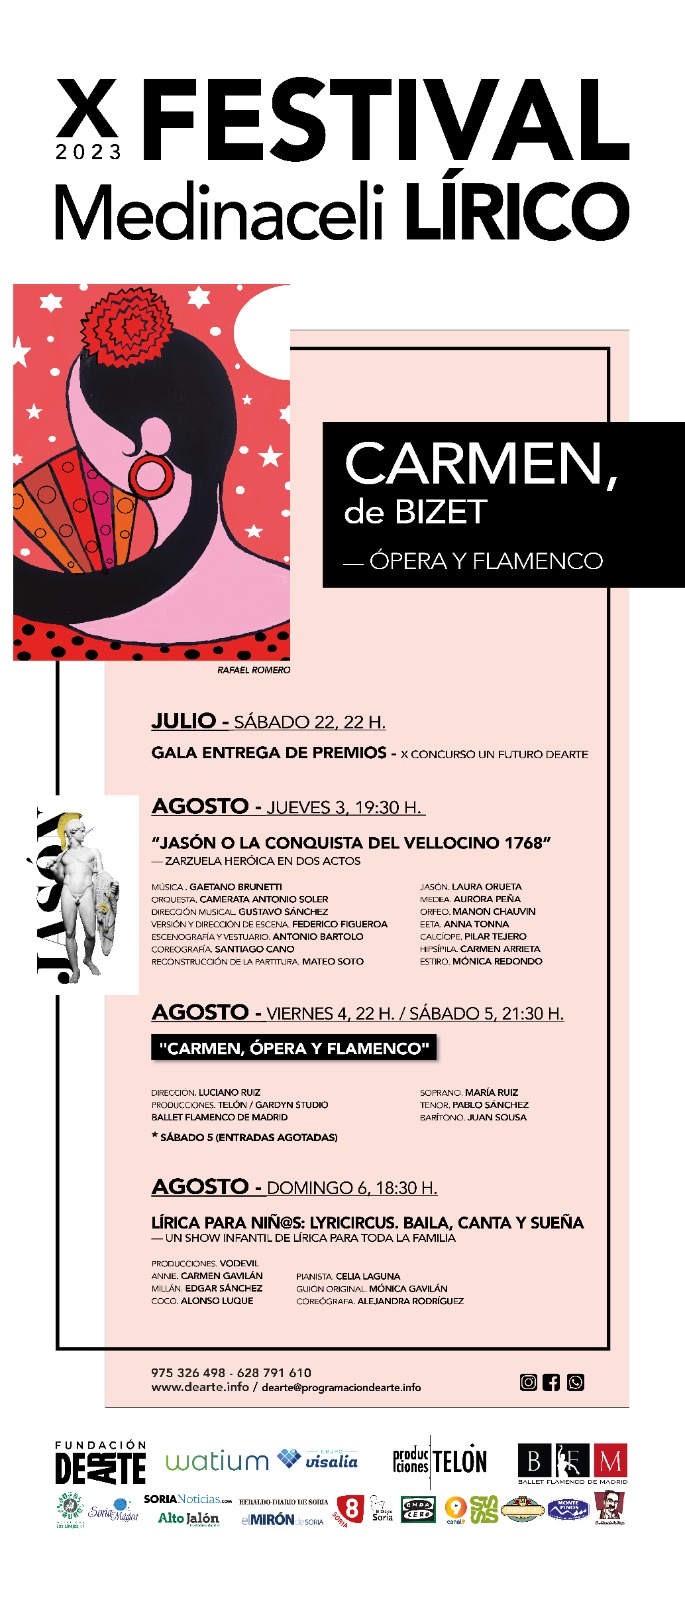 X FESTIVAL Medinaceli LÍRICO “CARMEN, de BIZET” Ópera y Flamenco